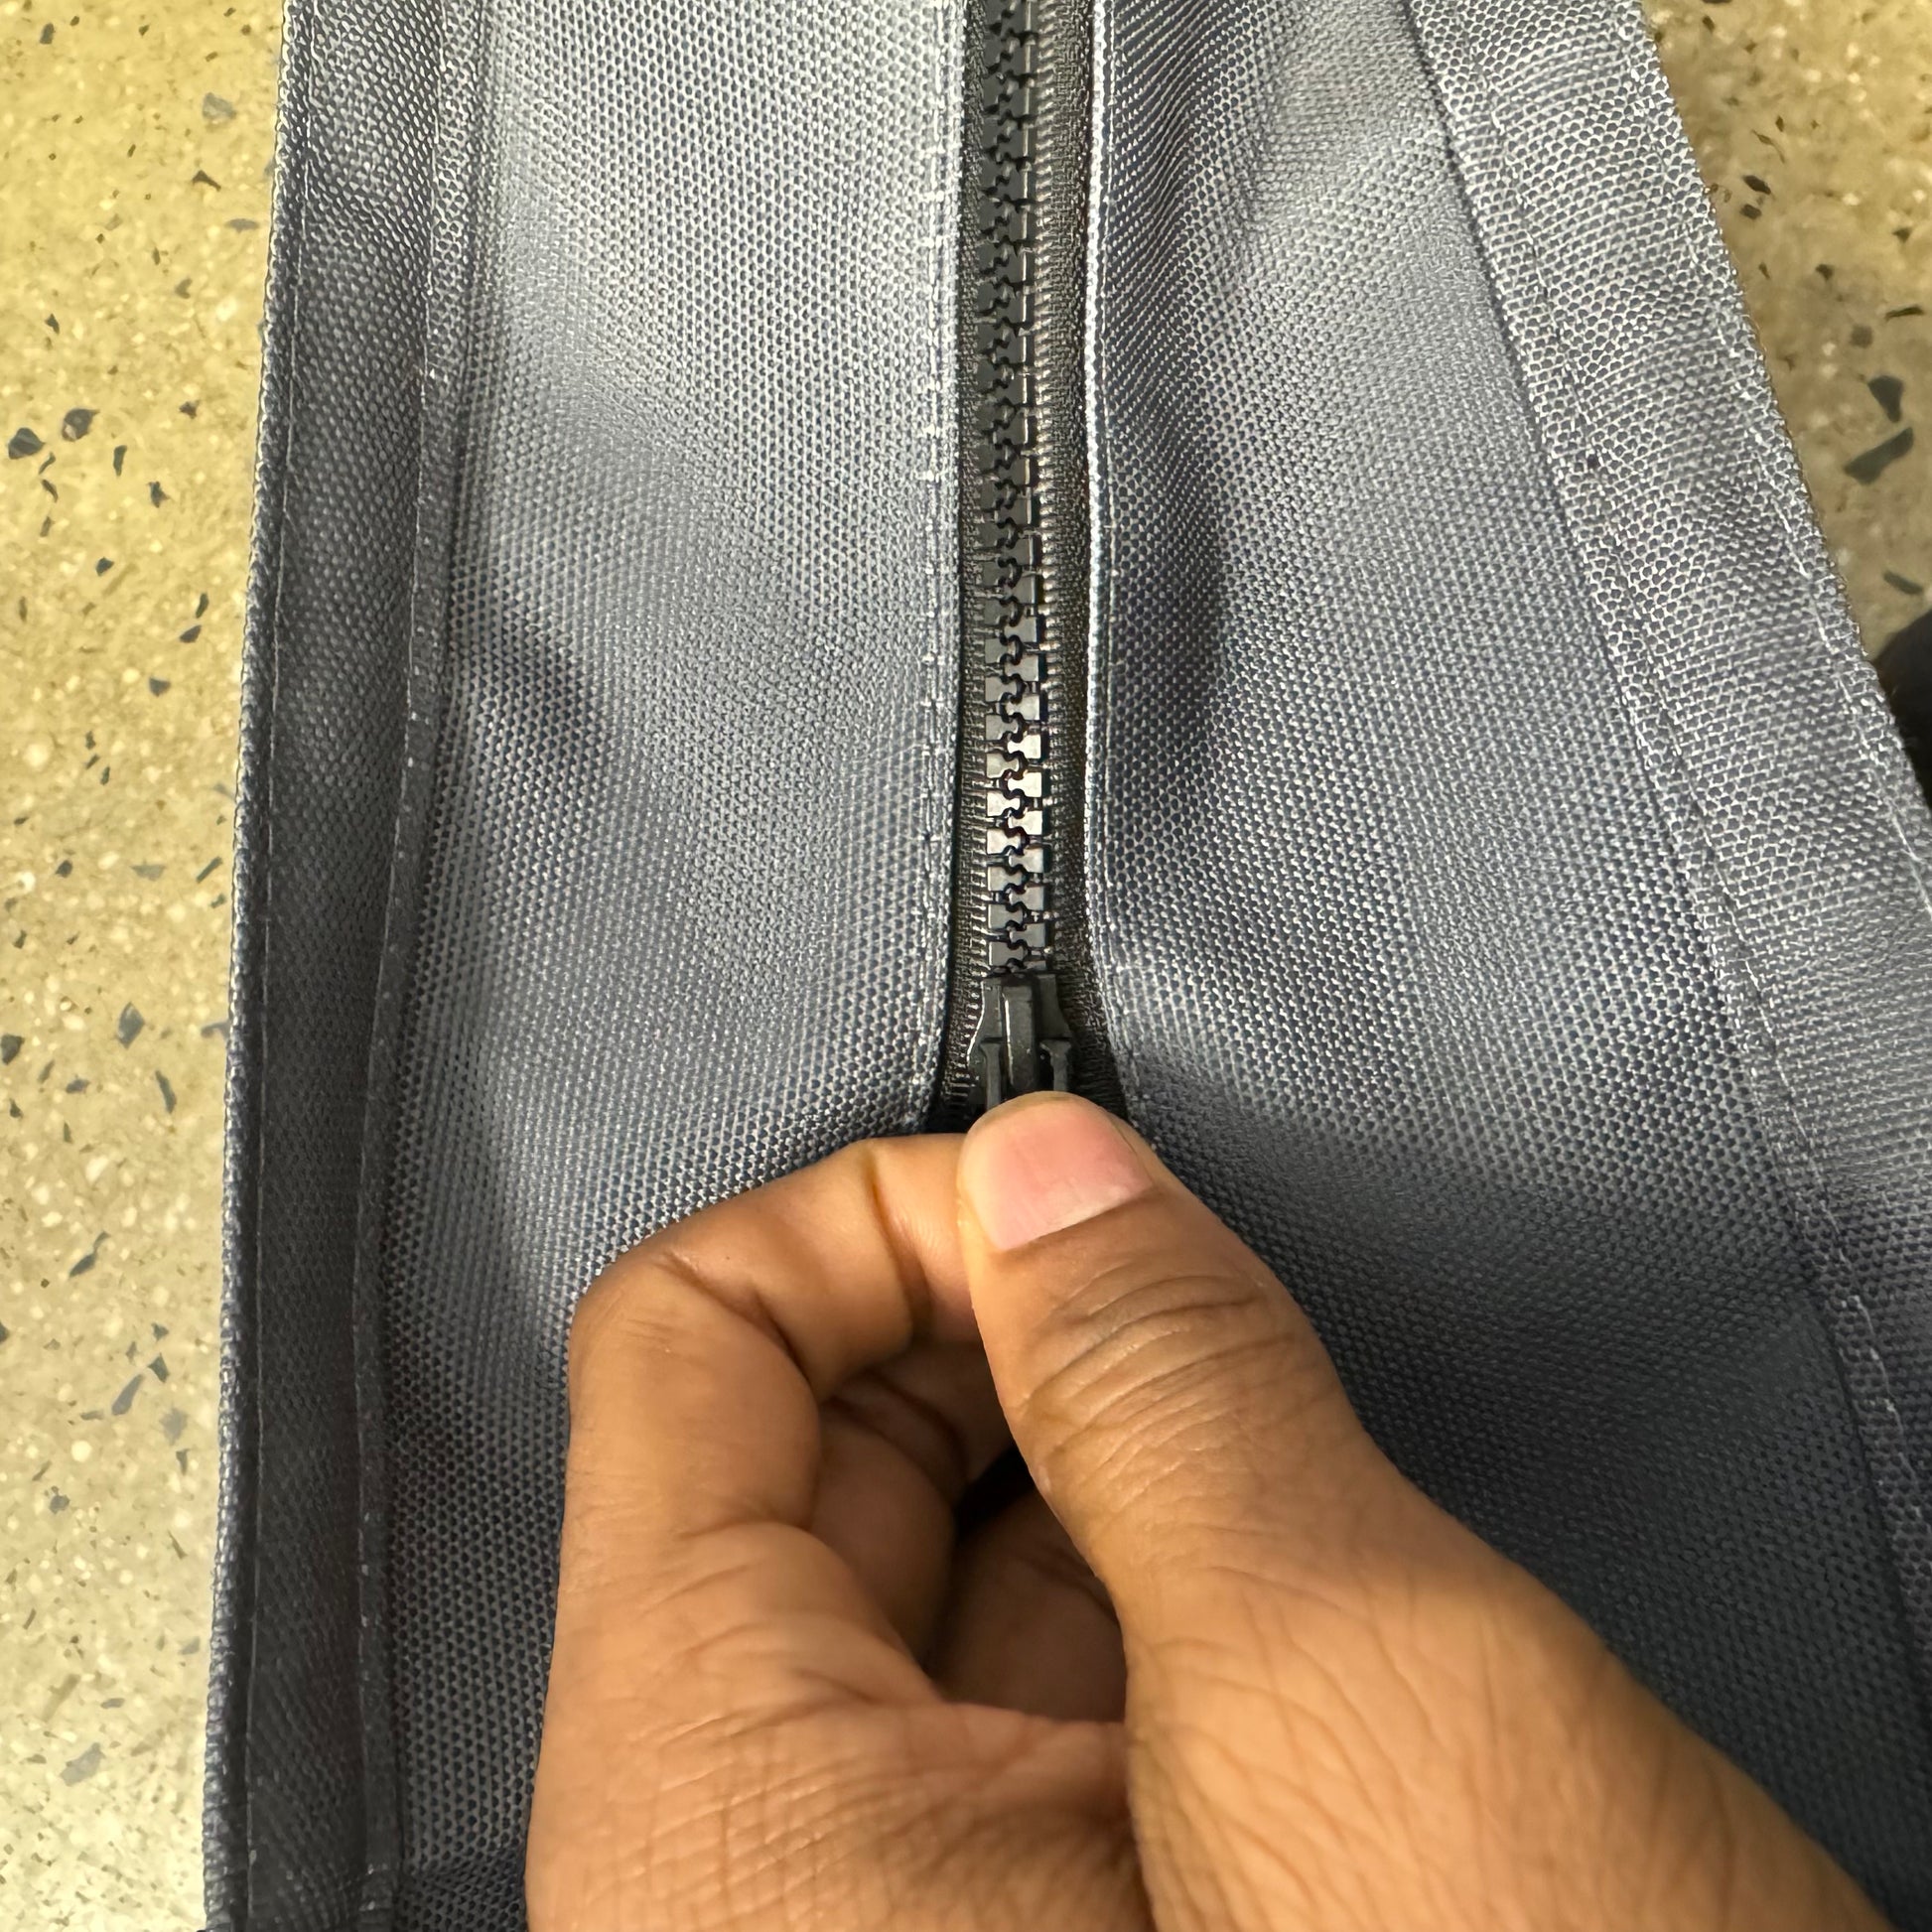 Zipper on top of tote bag